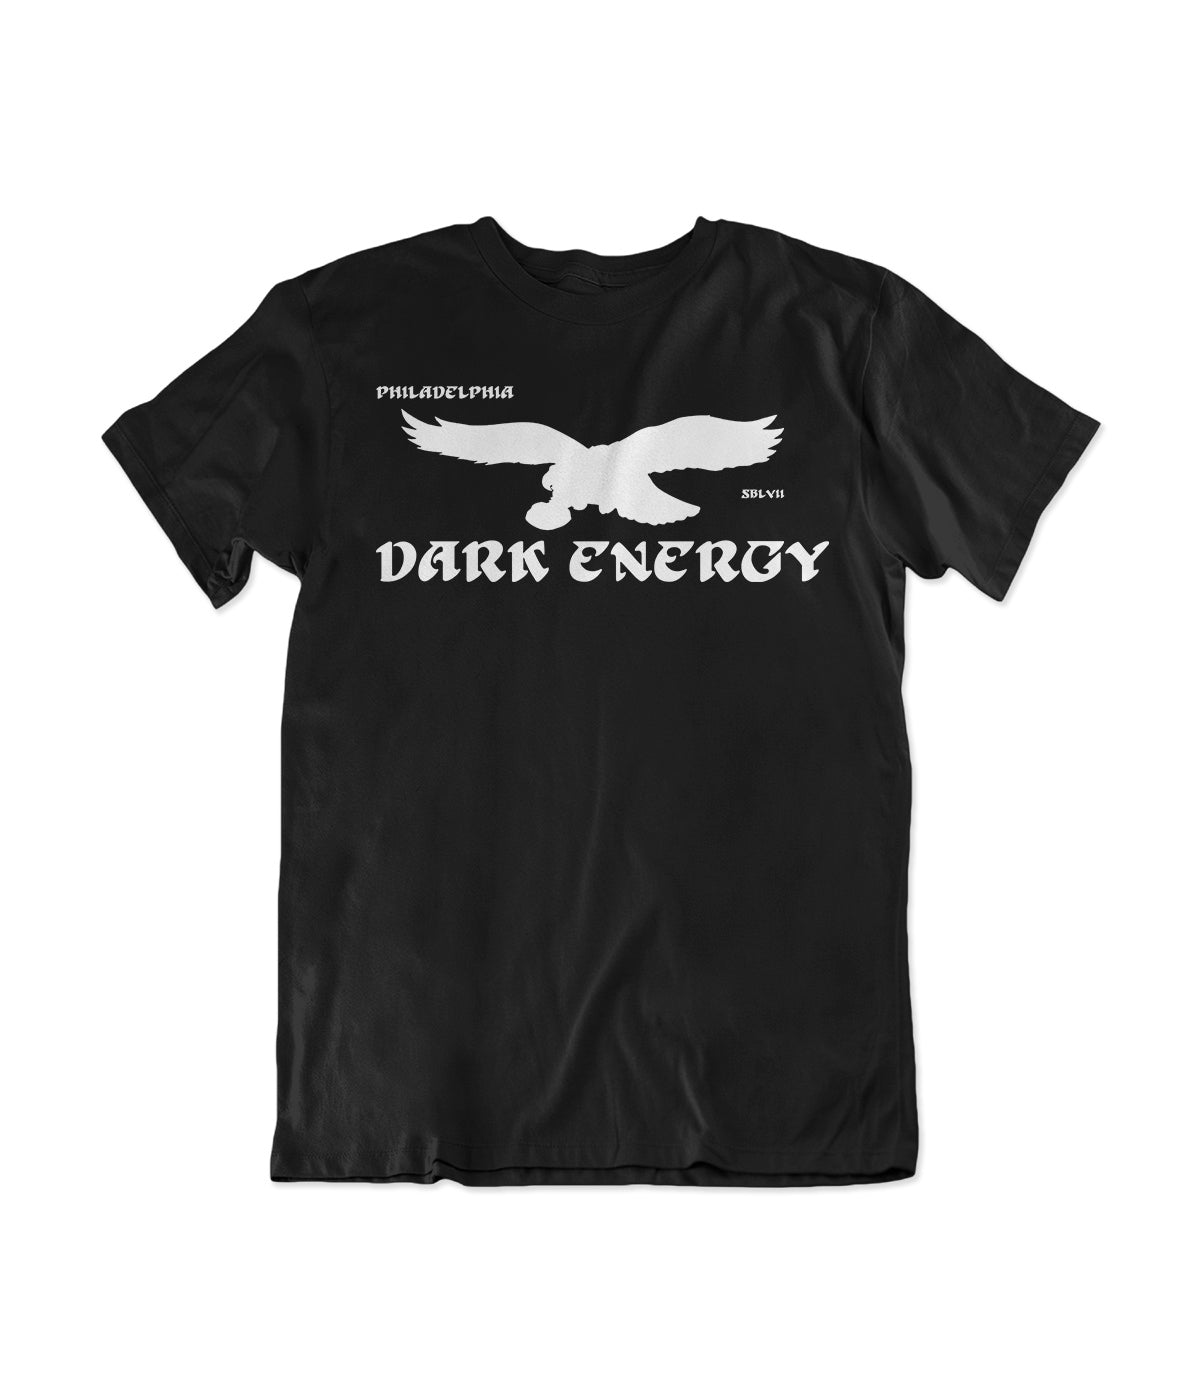 Dark Energy: Philadelphia PA